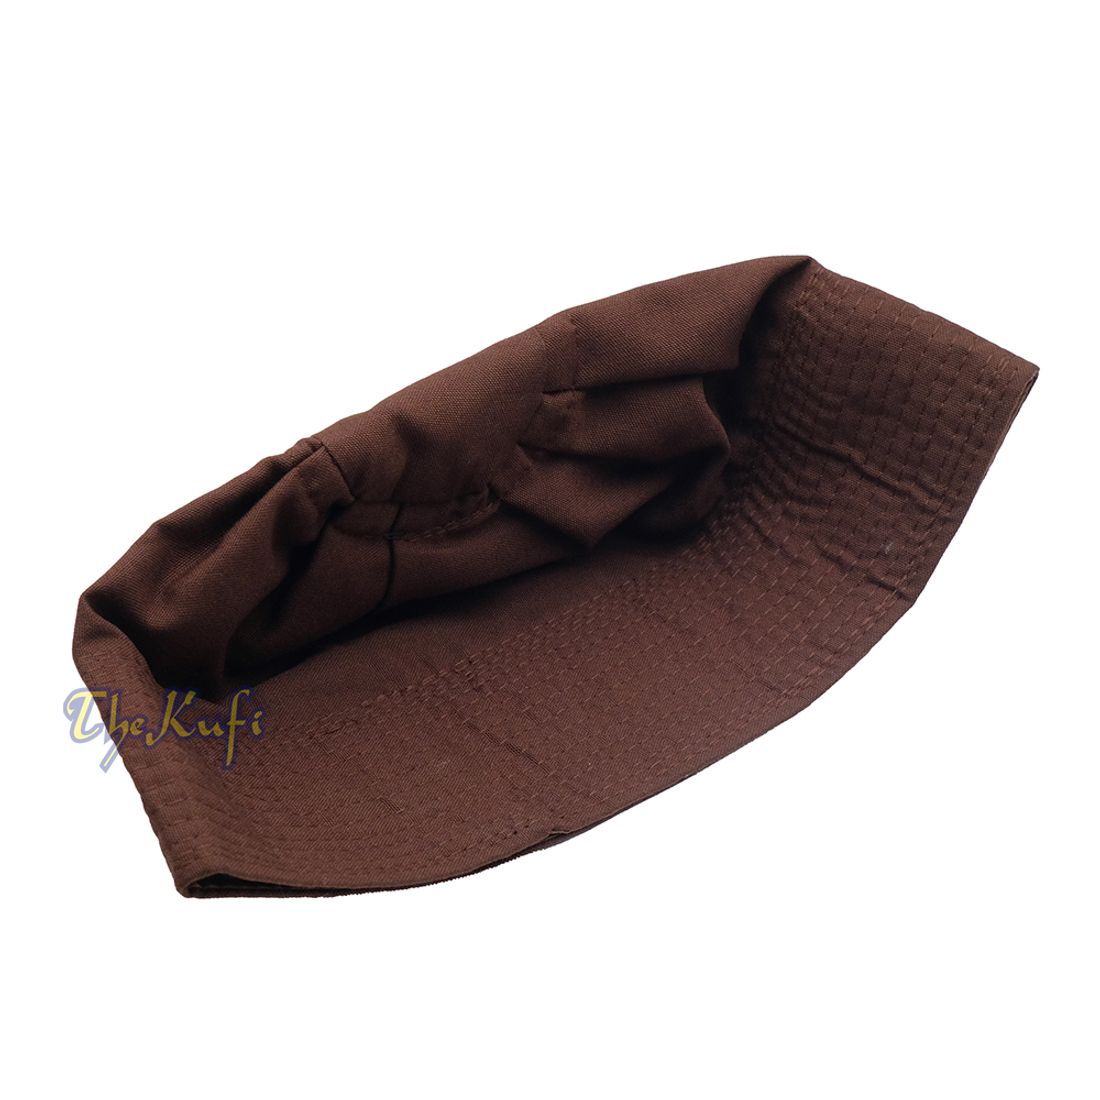 Dark Brown Fabric Pleated-top Cotton Kufi Hat